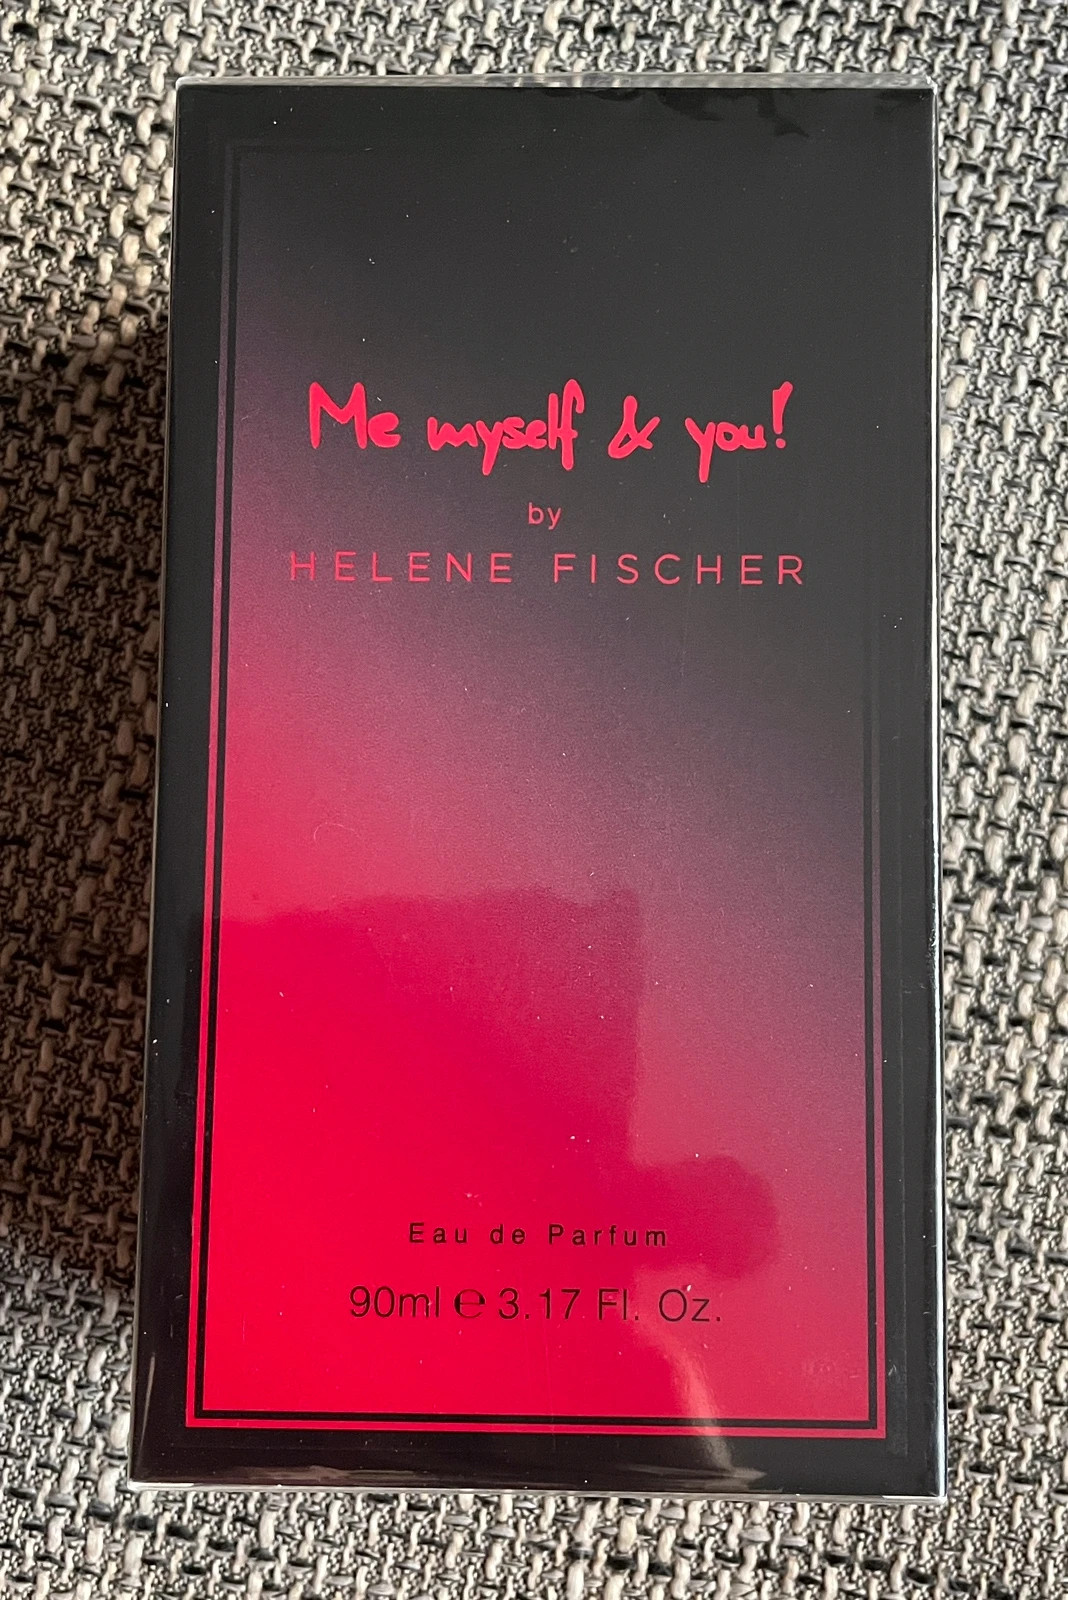 You Helene | Fischer & Vinted Myself Me,